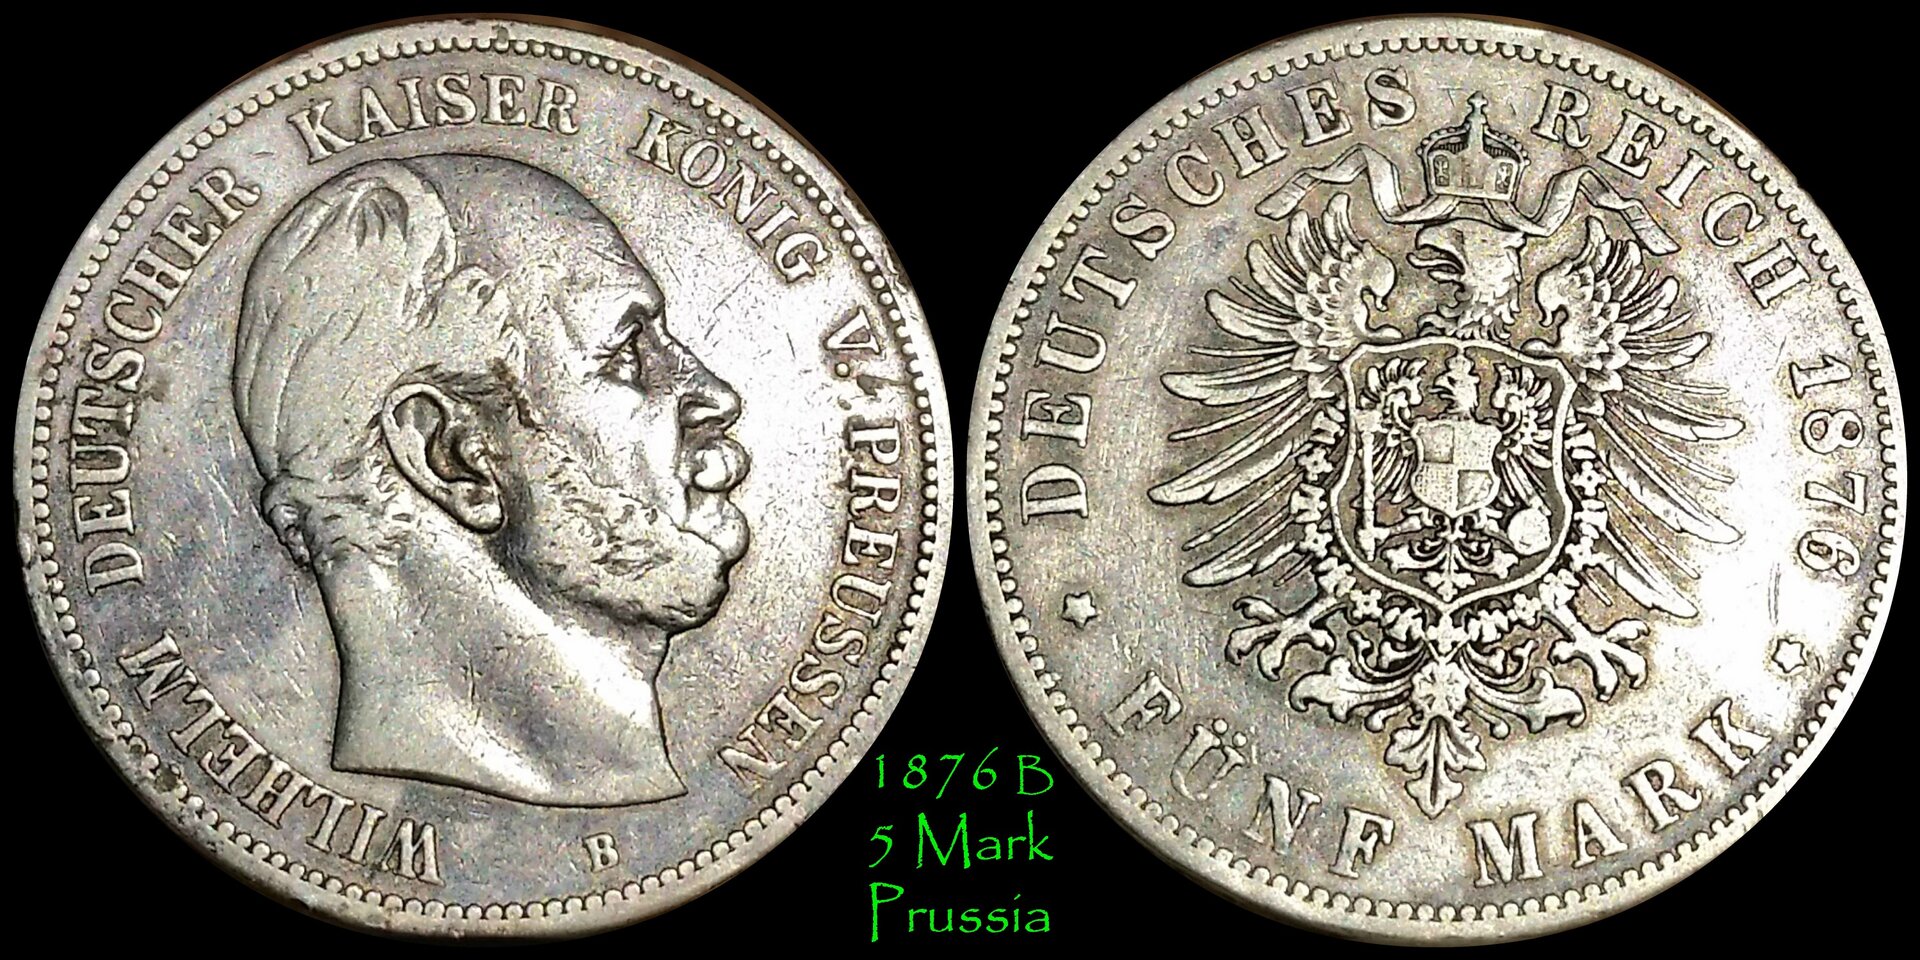 1876 B 5 Mark Prussia.jpg